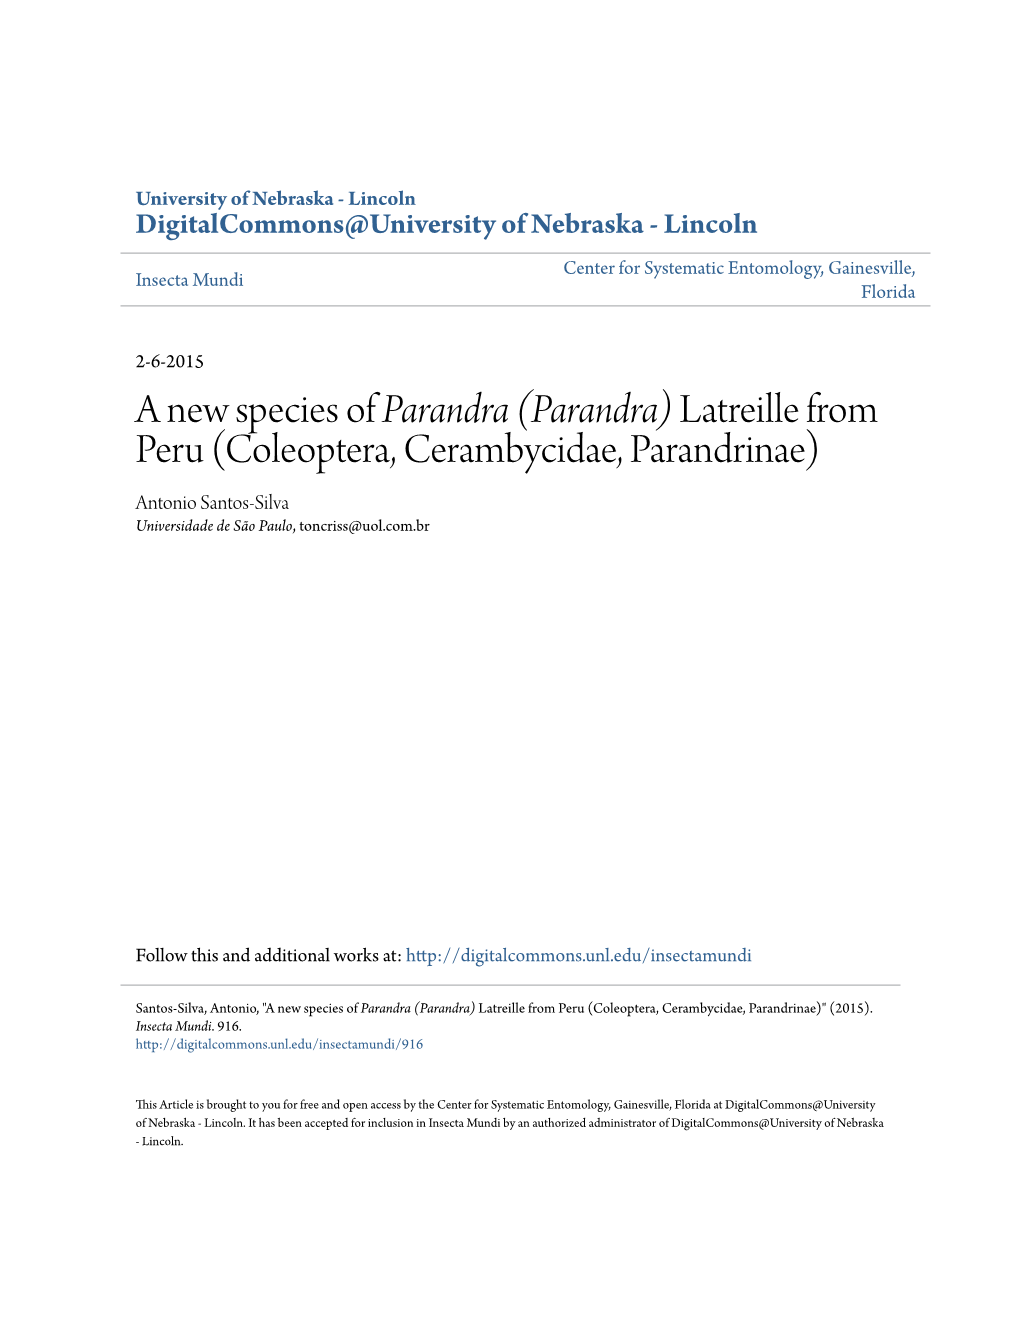 A New Species of &lt;I&gt;Parandra (Parandra)&lt;/I&gt; Latreille from Peru